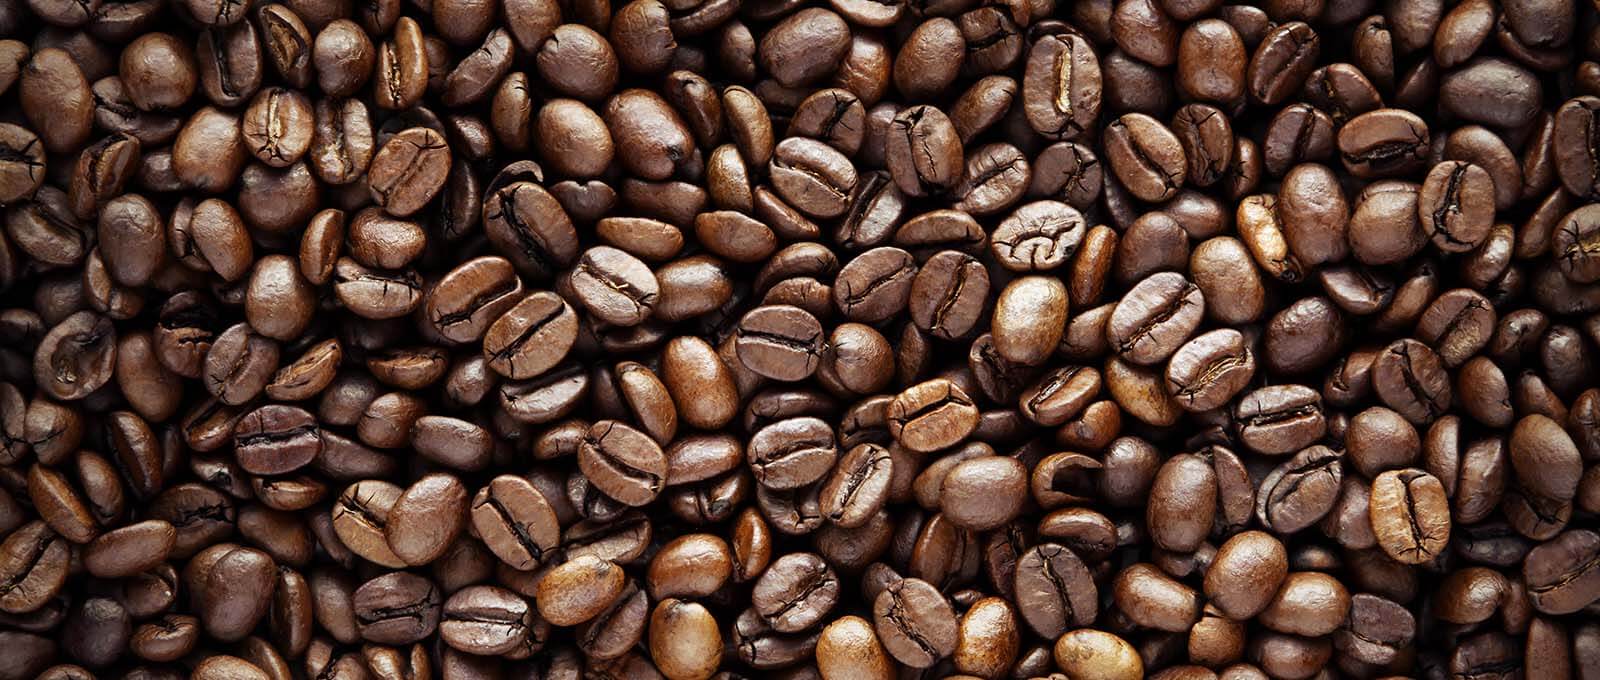 Sustainability Consultancy UK Terrafiniti.com - Image of Coffee beans